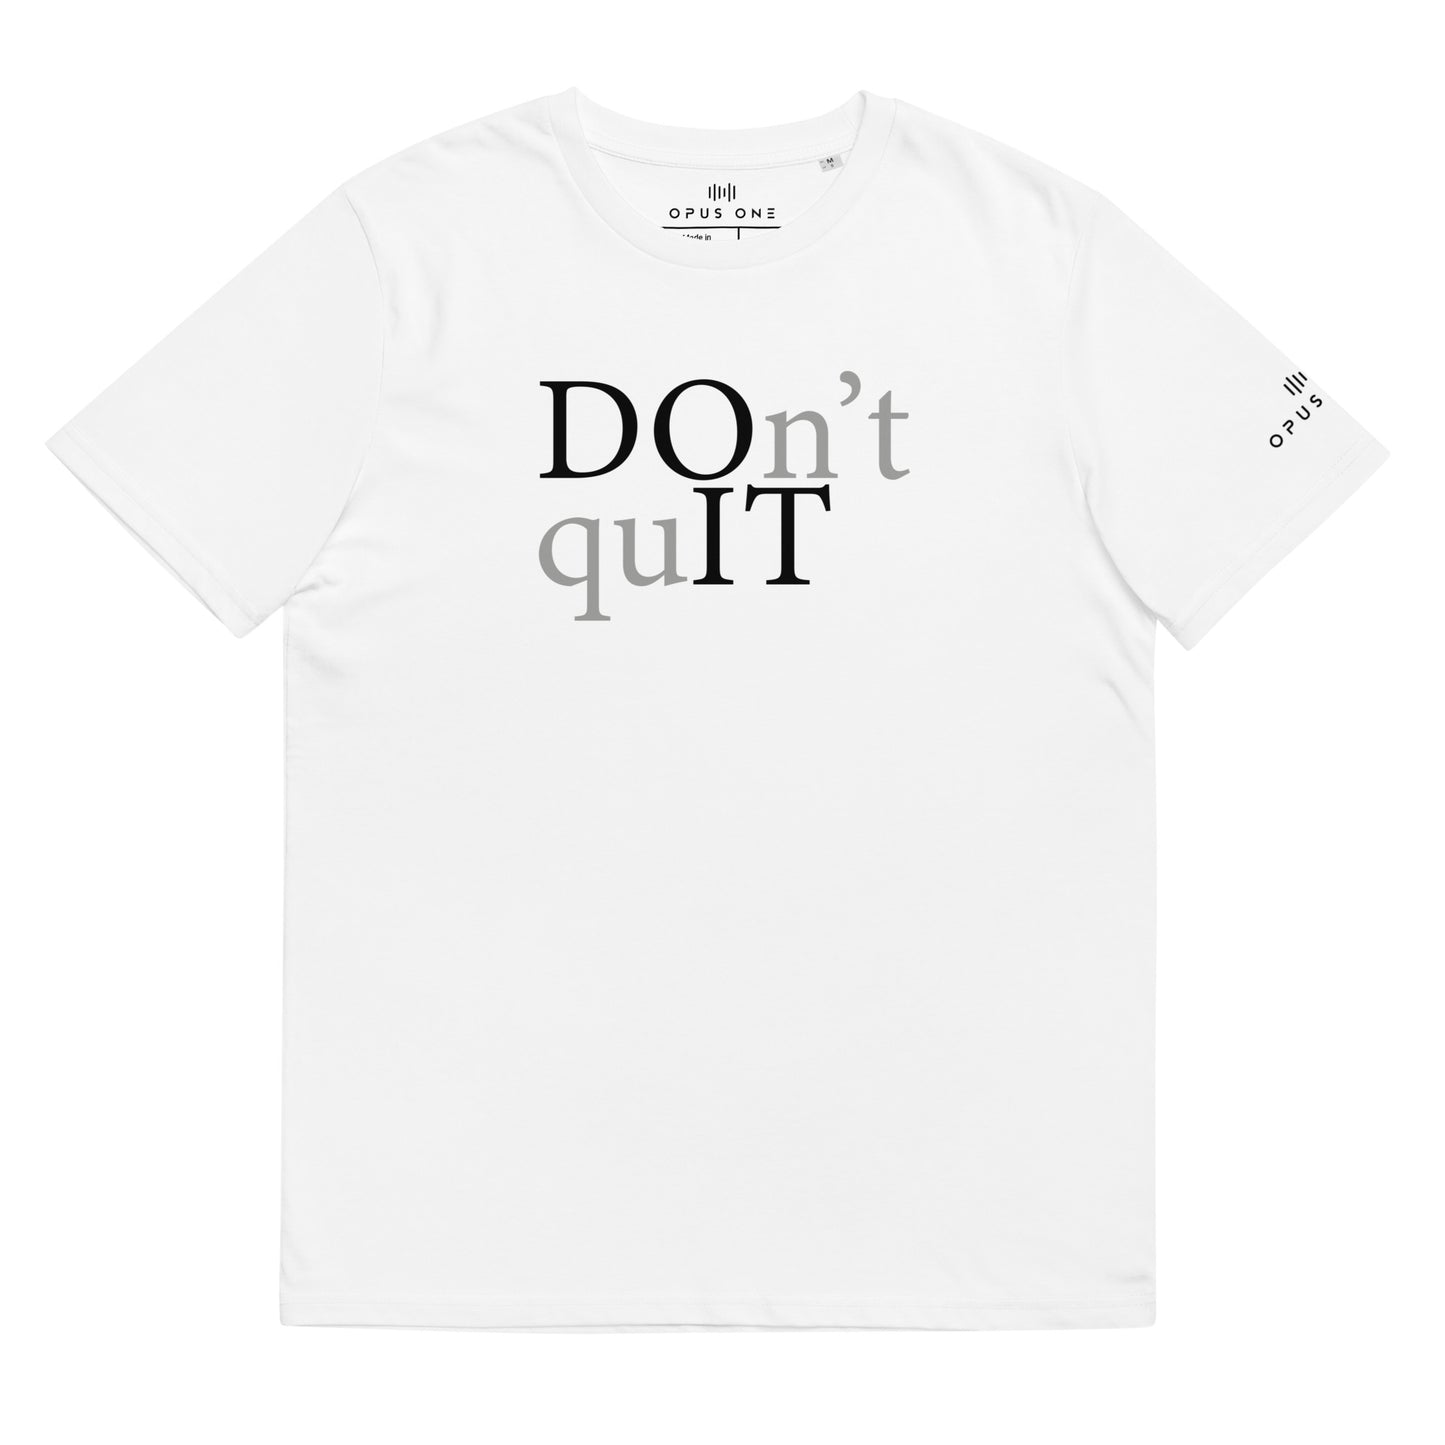 Ltd (DOn't quIT v1) Unisex organic cotton t-shirt (Black Text)